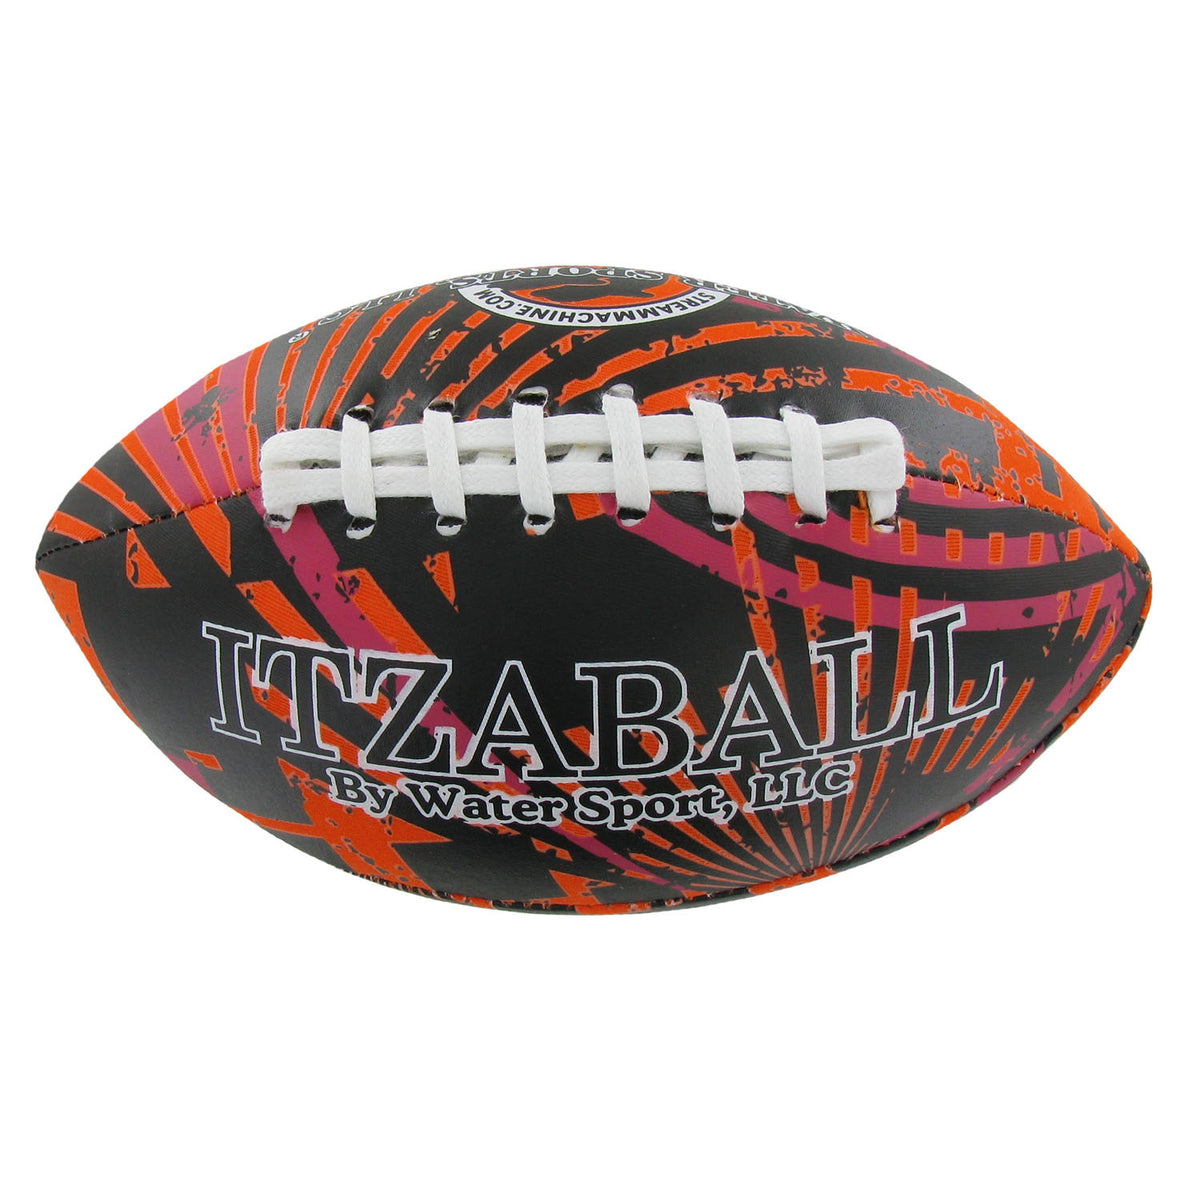 Stream Machine 80080-0 ItzaFootball Soft Football, Assorted Colors, 9"